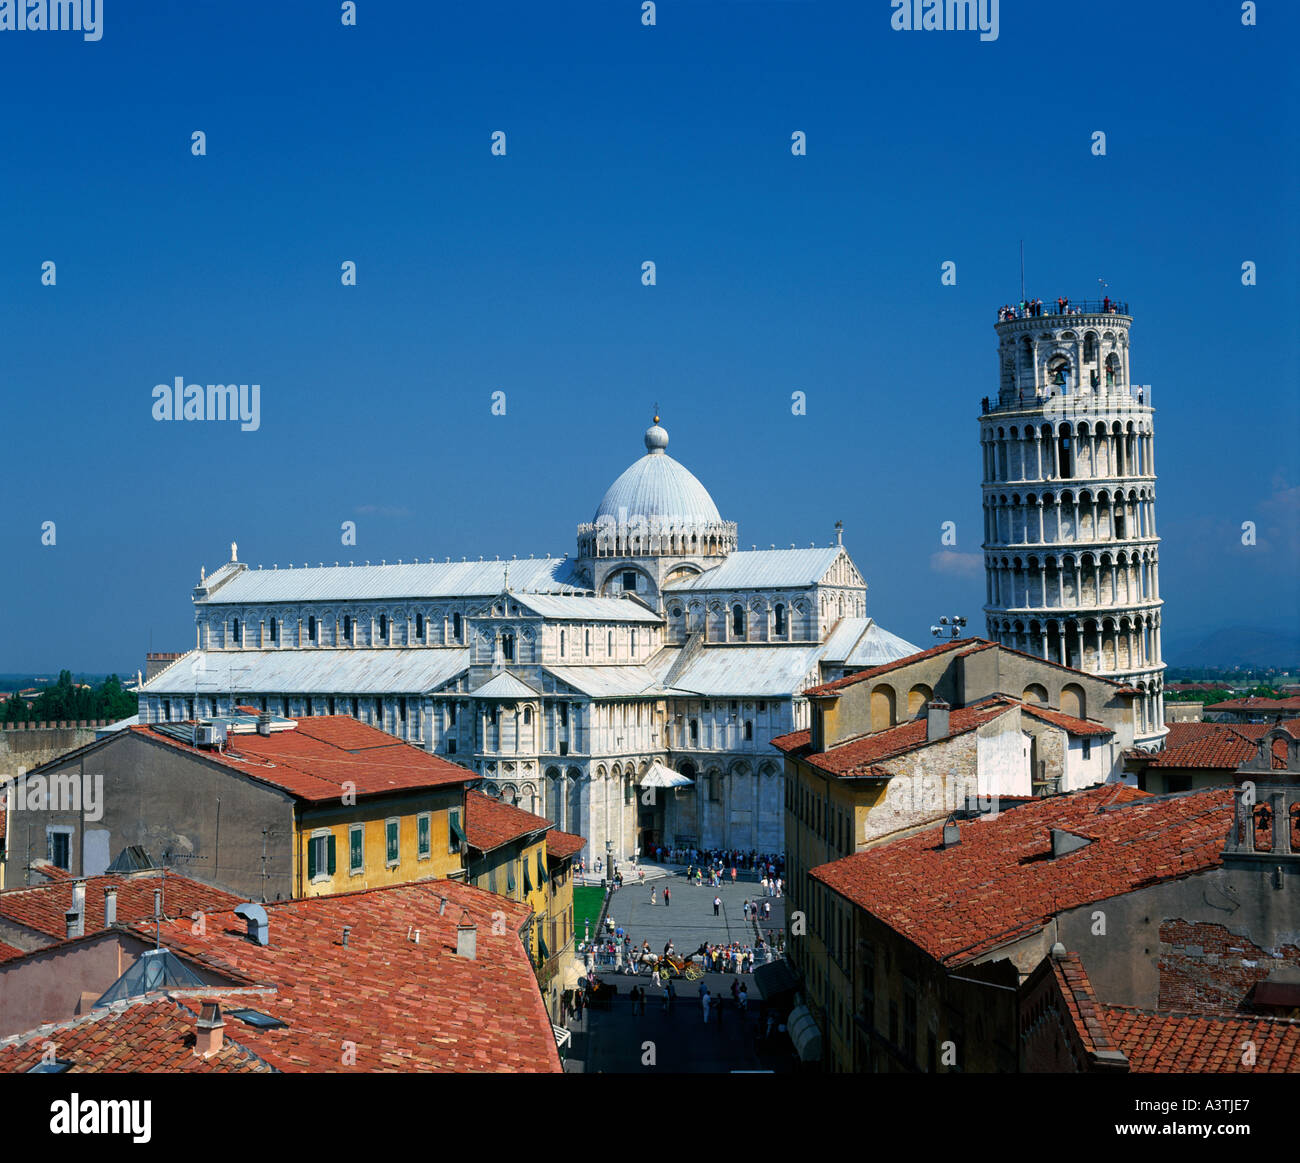 Schiefer Turm von Pisa, Toskana, Italien Stockfoto